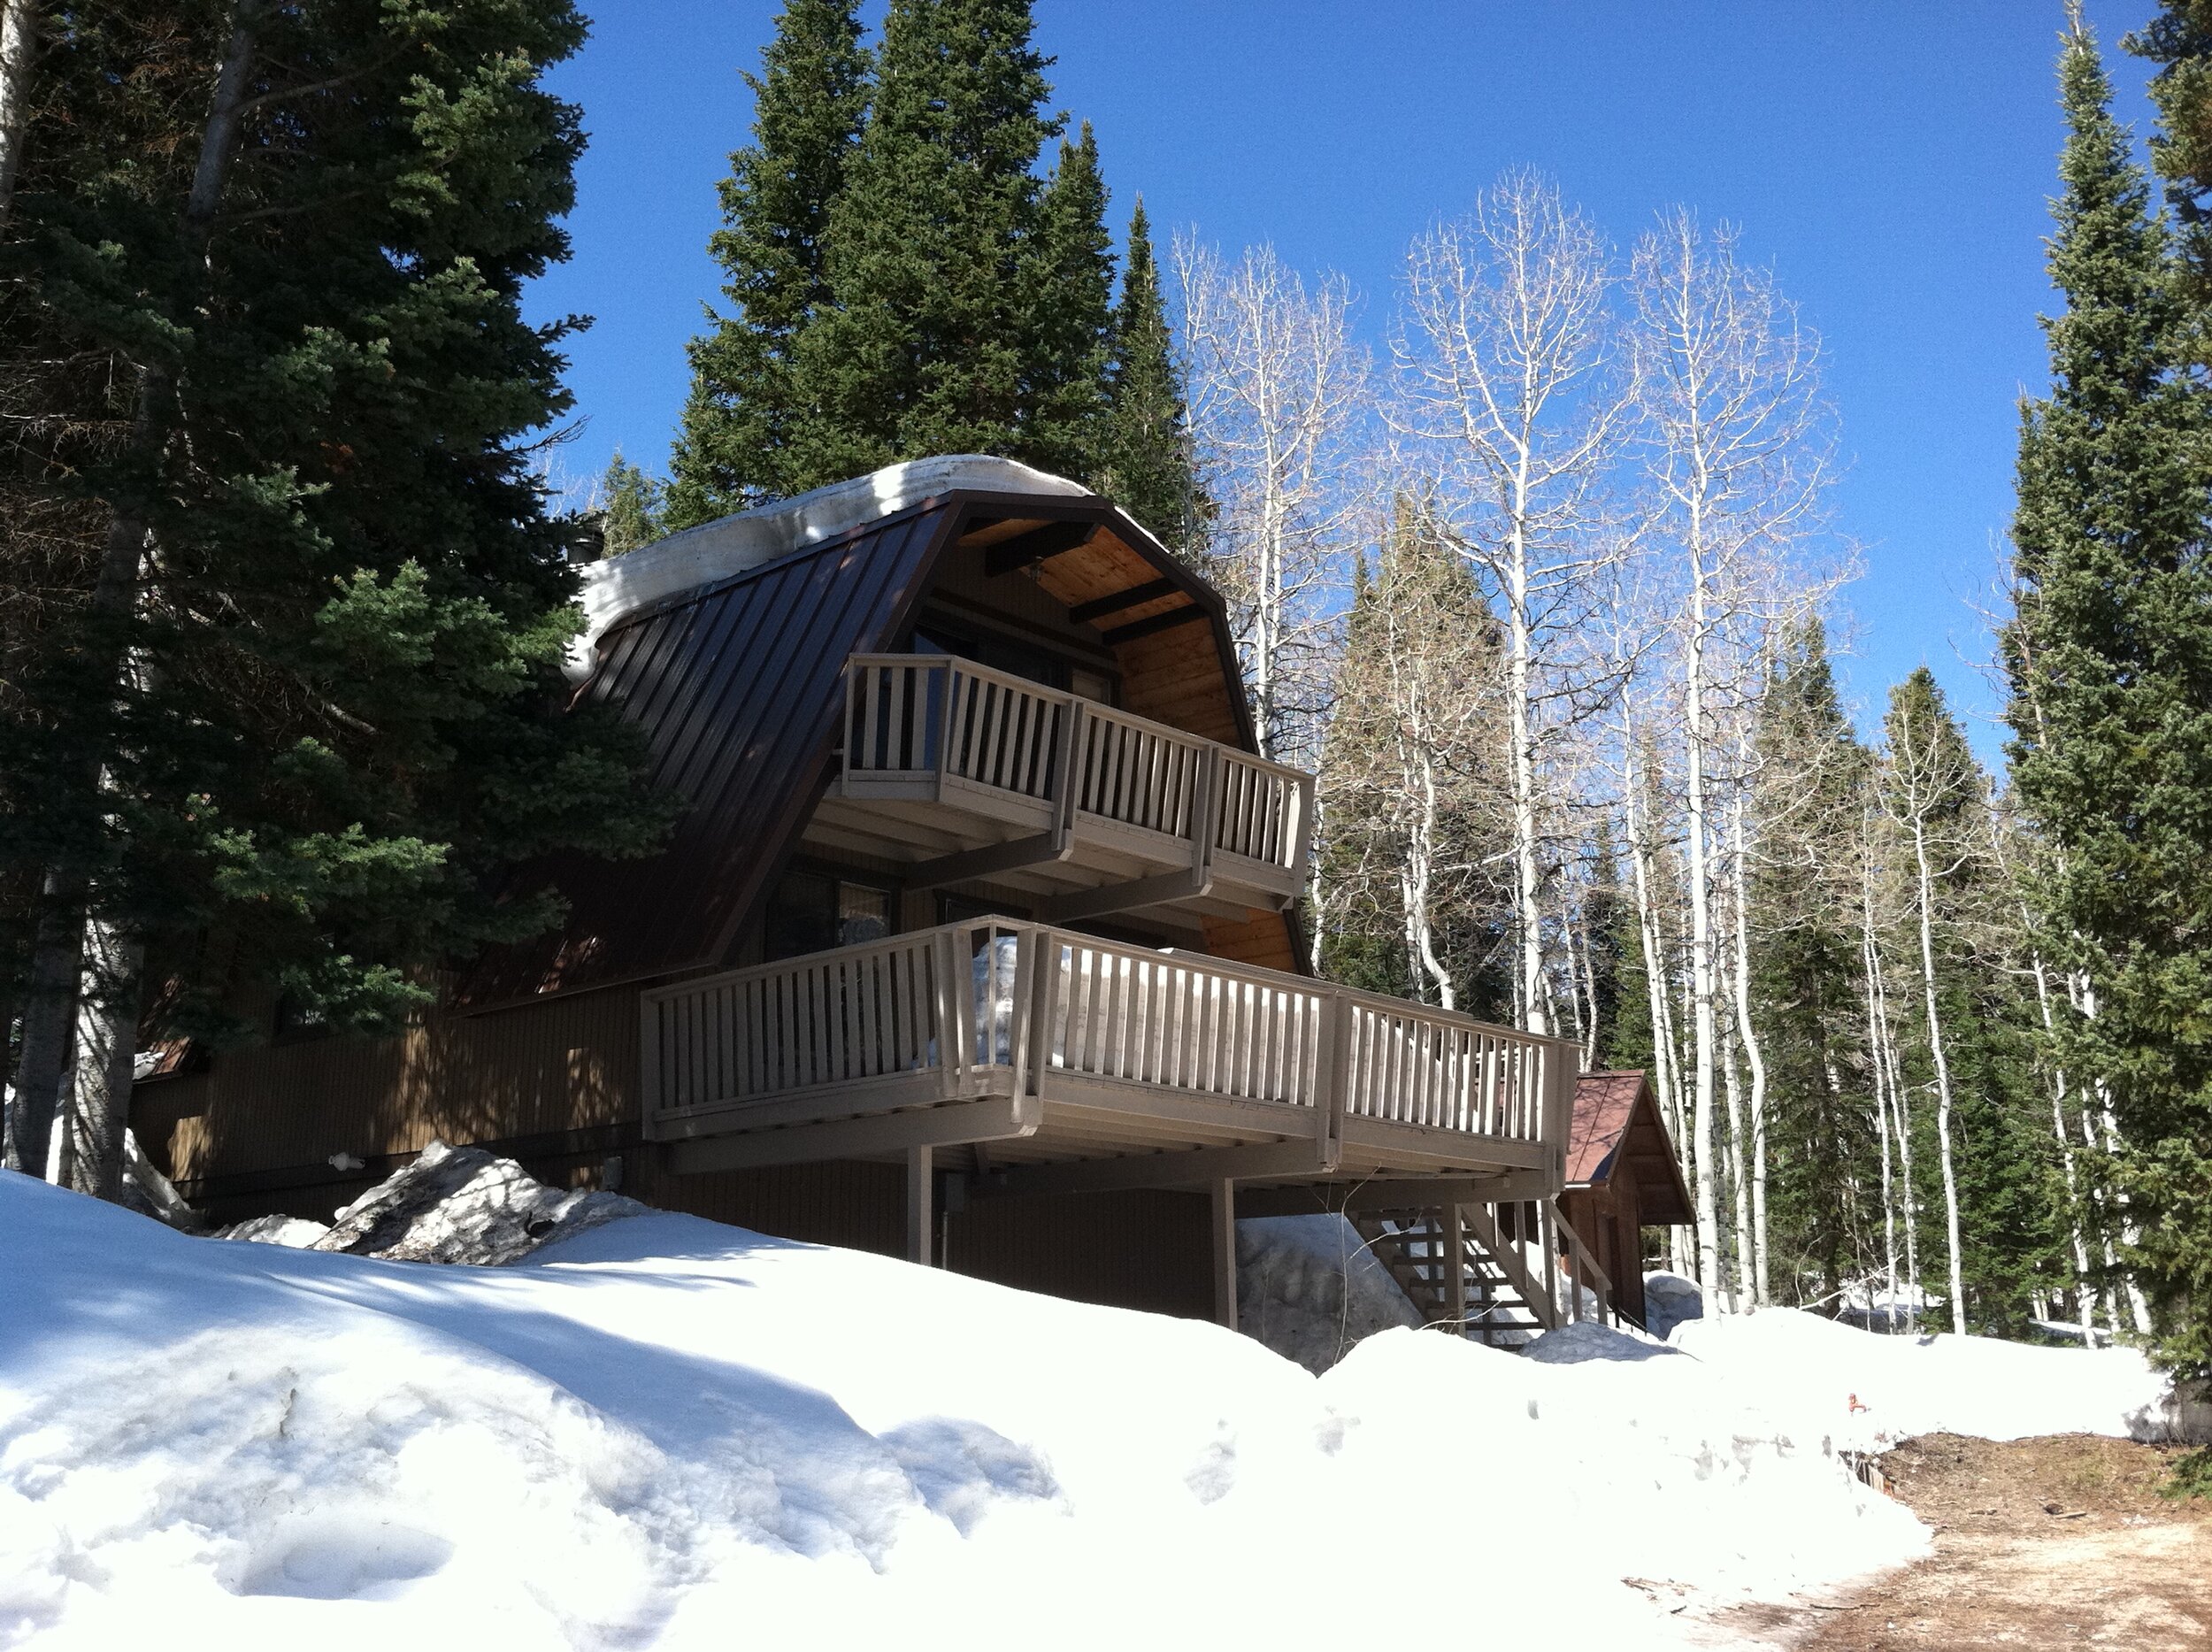 Timberlakes cabin. 2011.